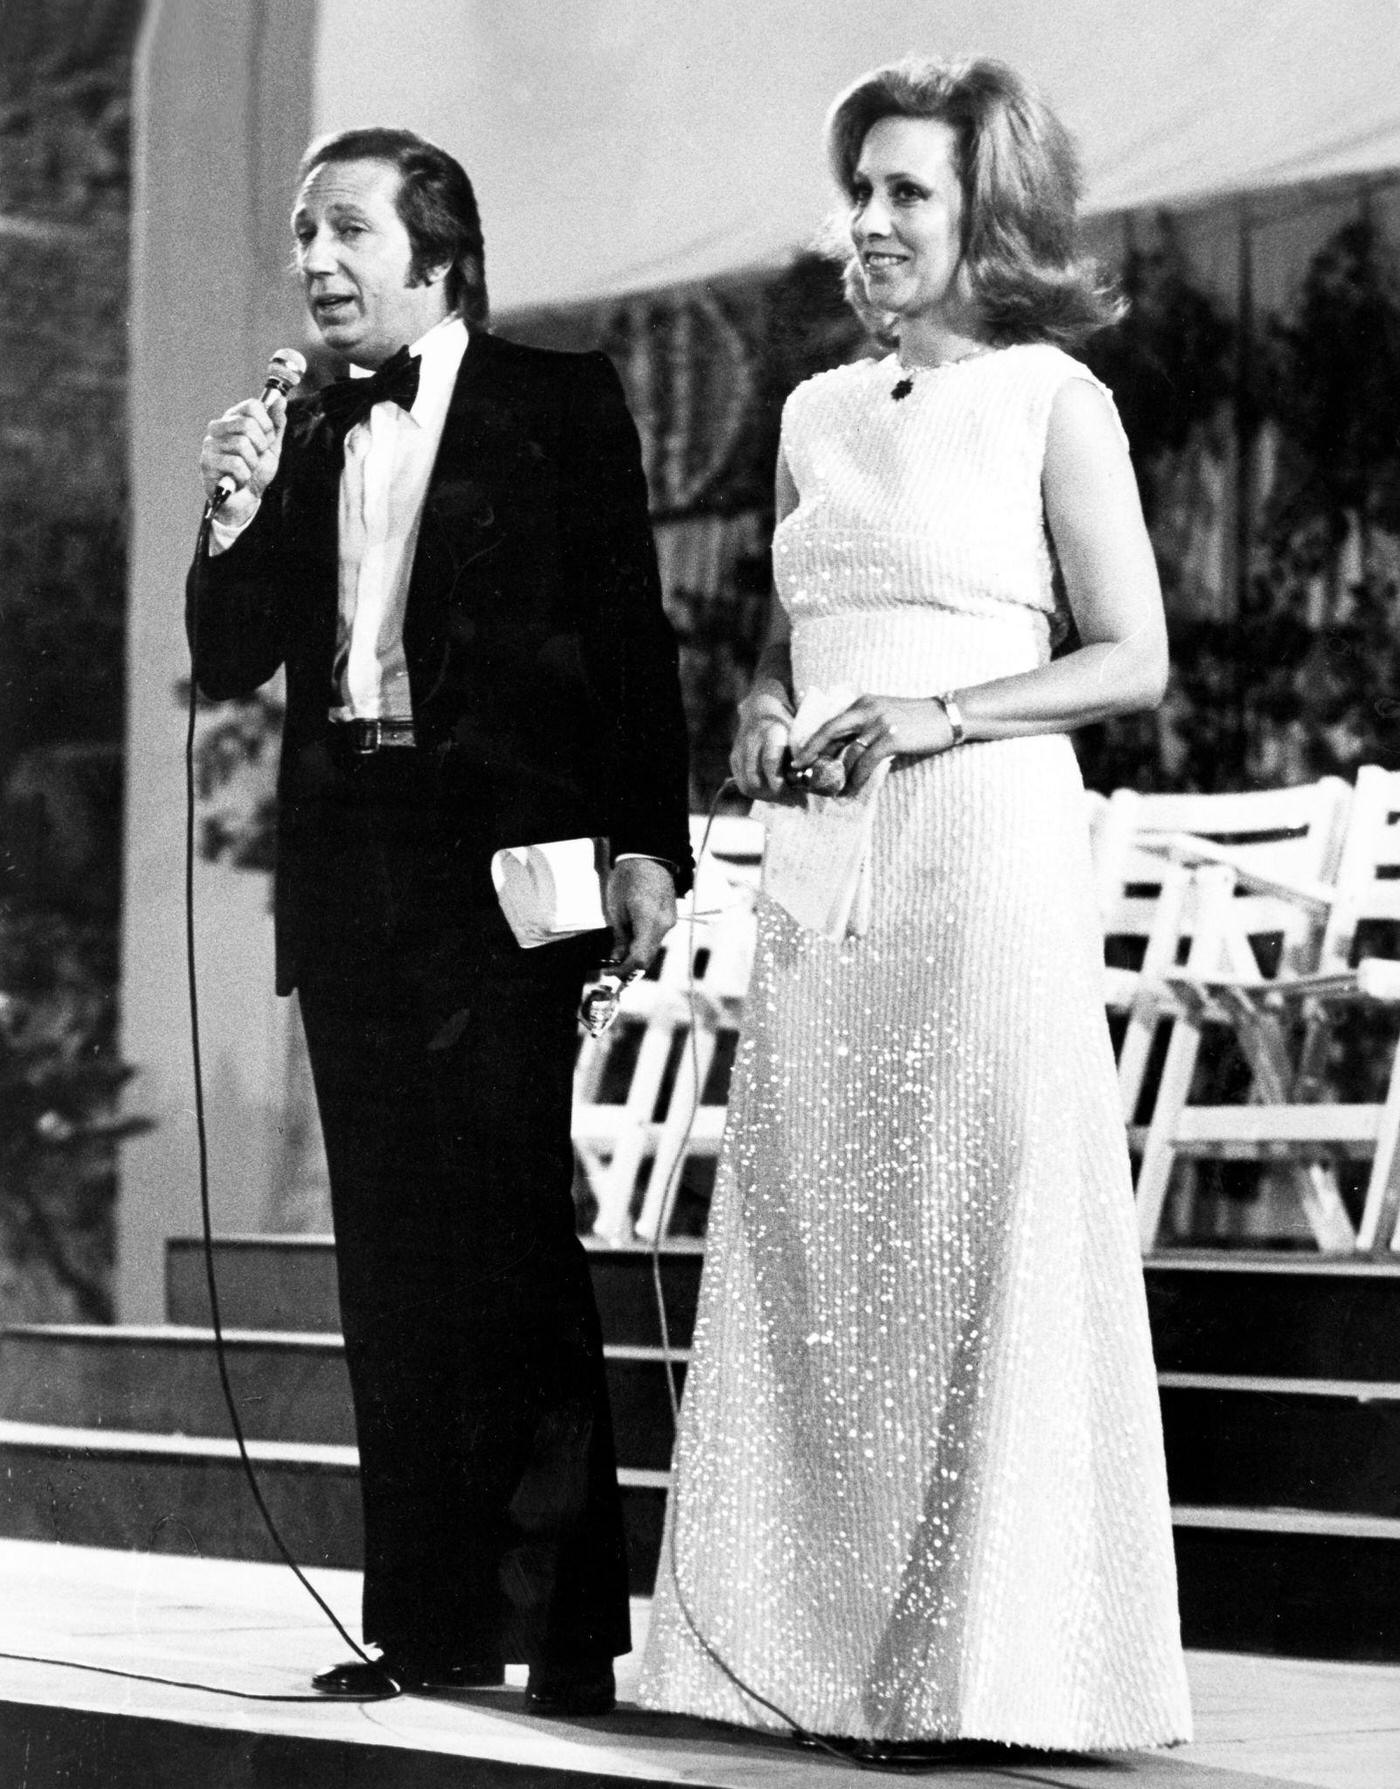 Mike Bongiorno and Rosanna Vaudetti leading the David di Donatello awards in Taormina, July 1972.